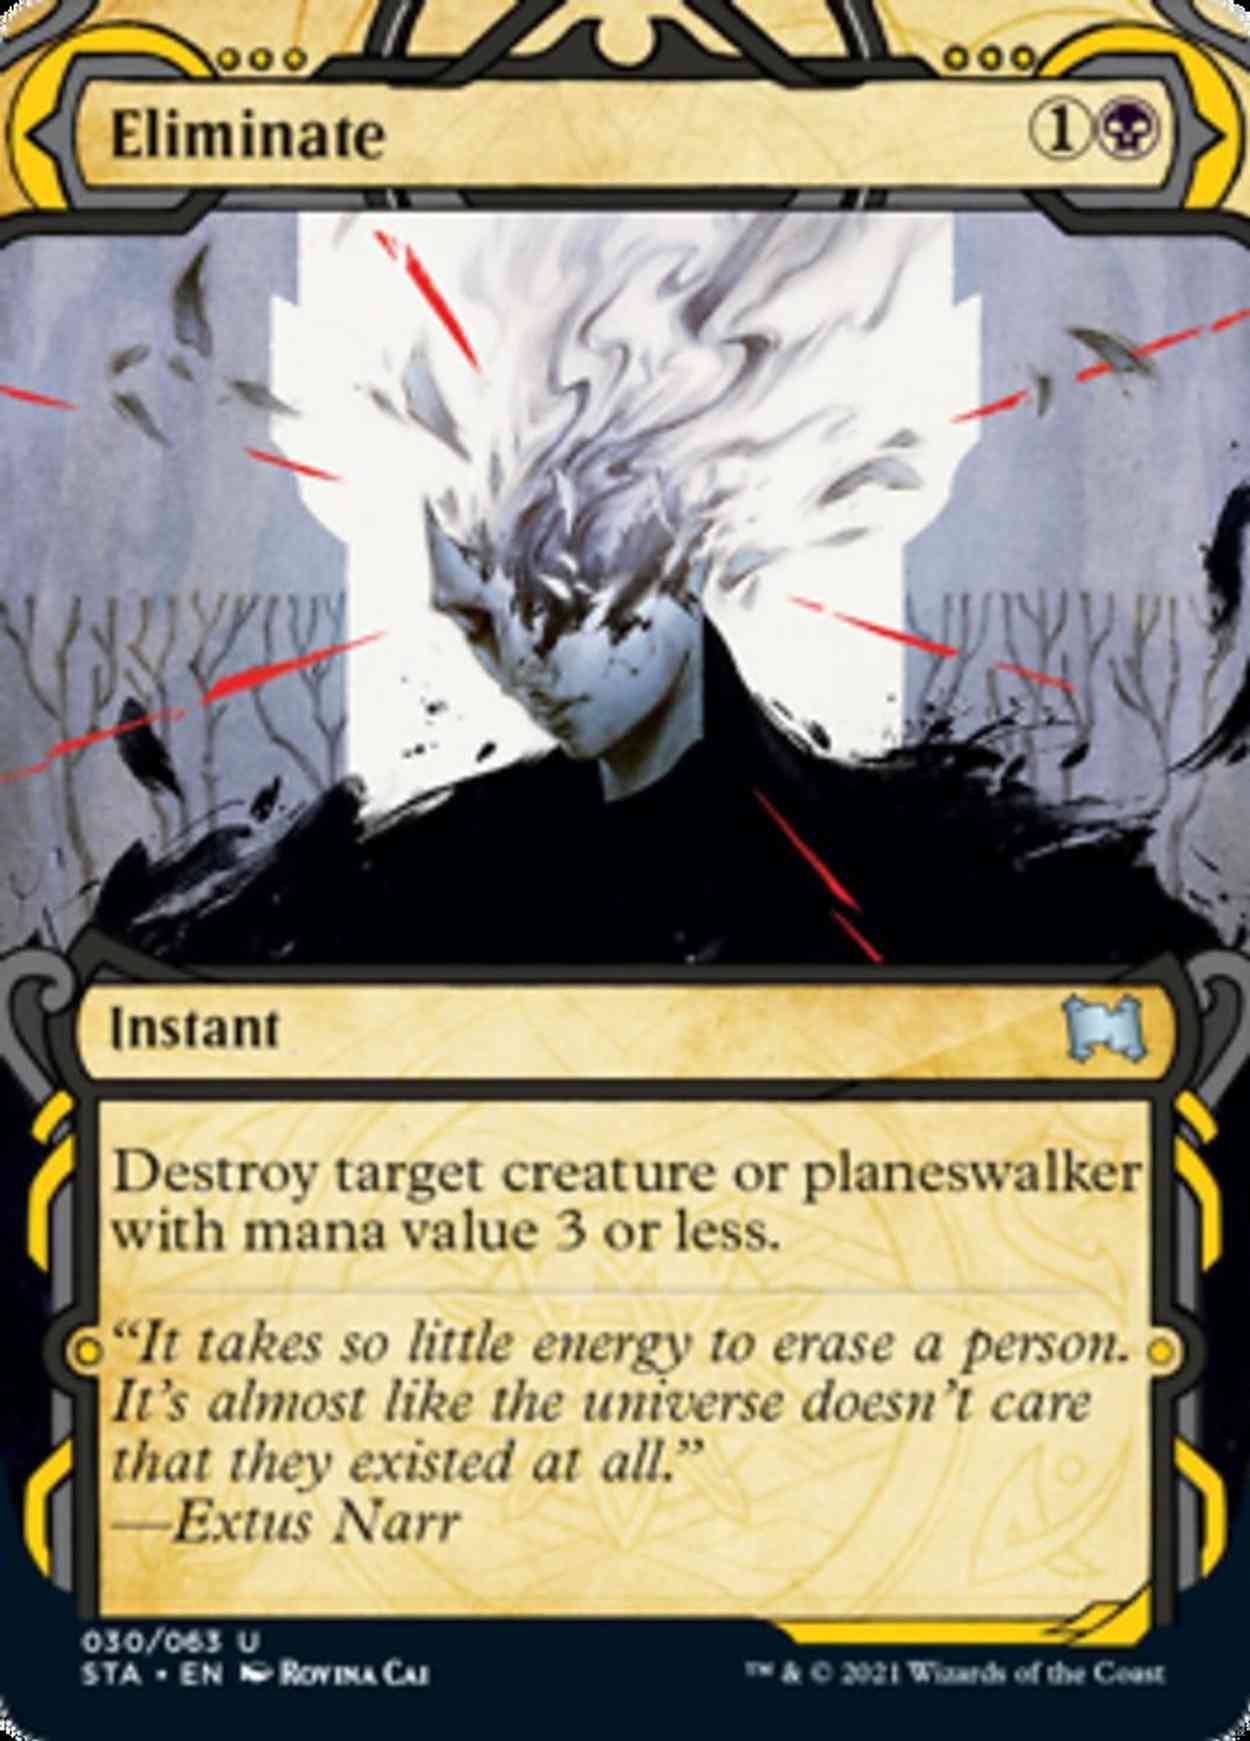 Eliminate magic card front